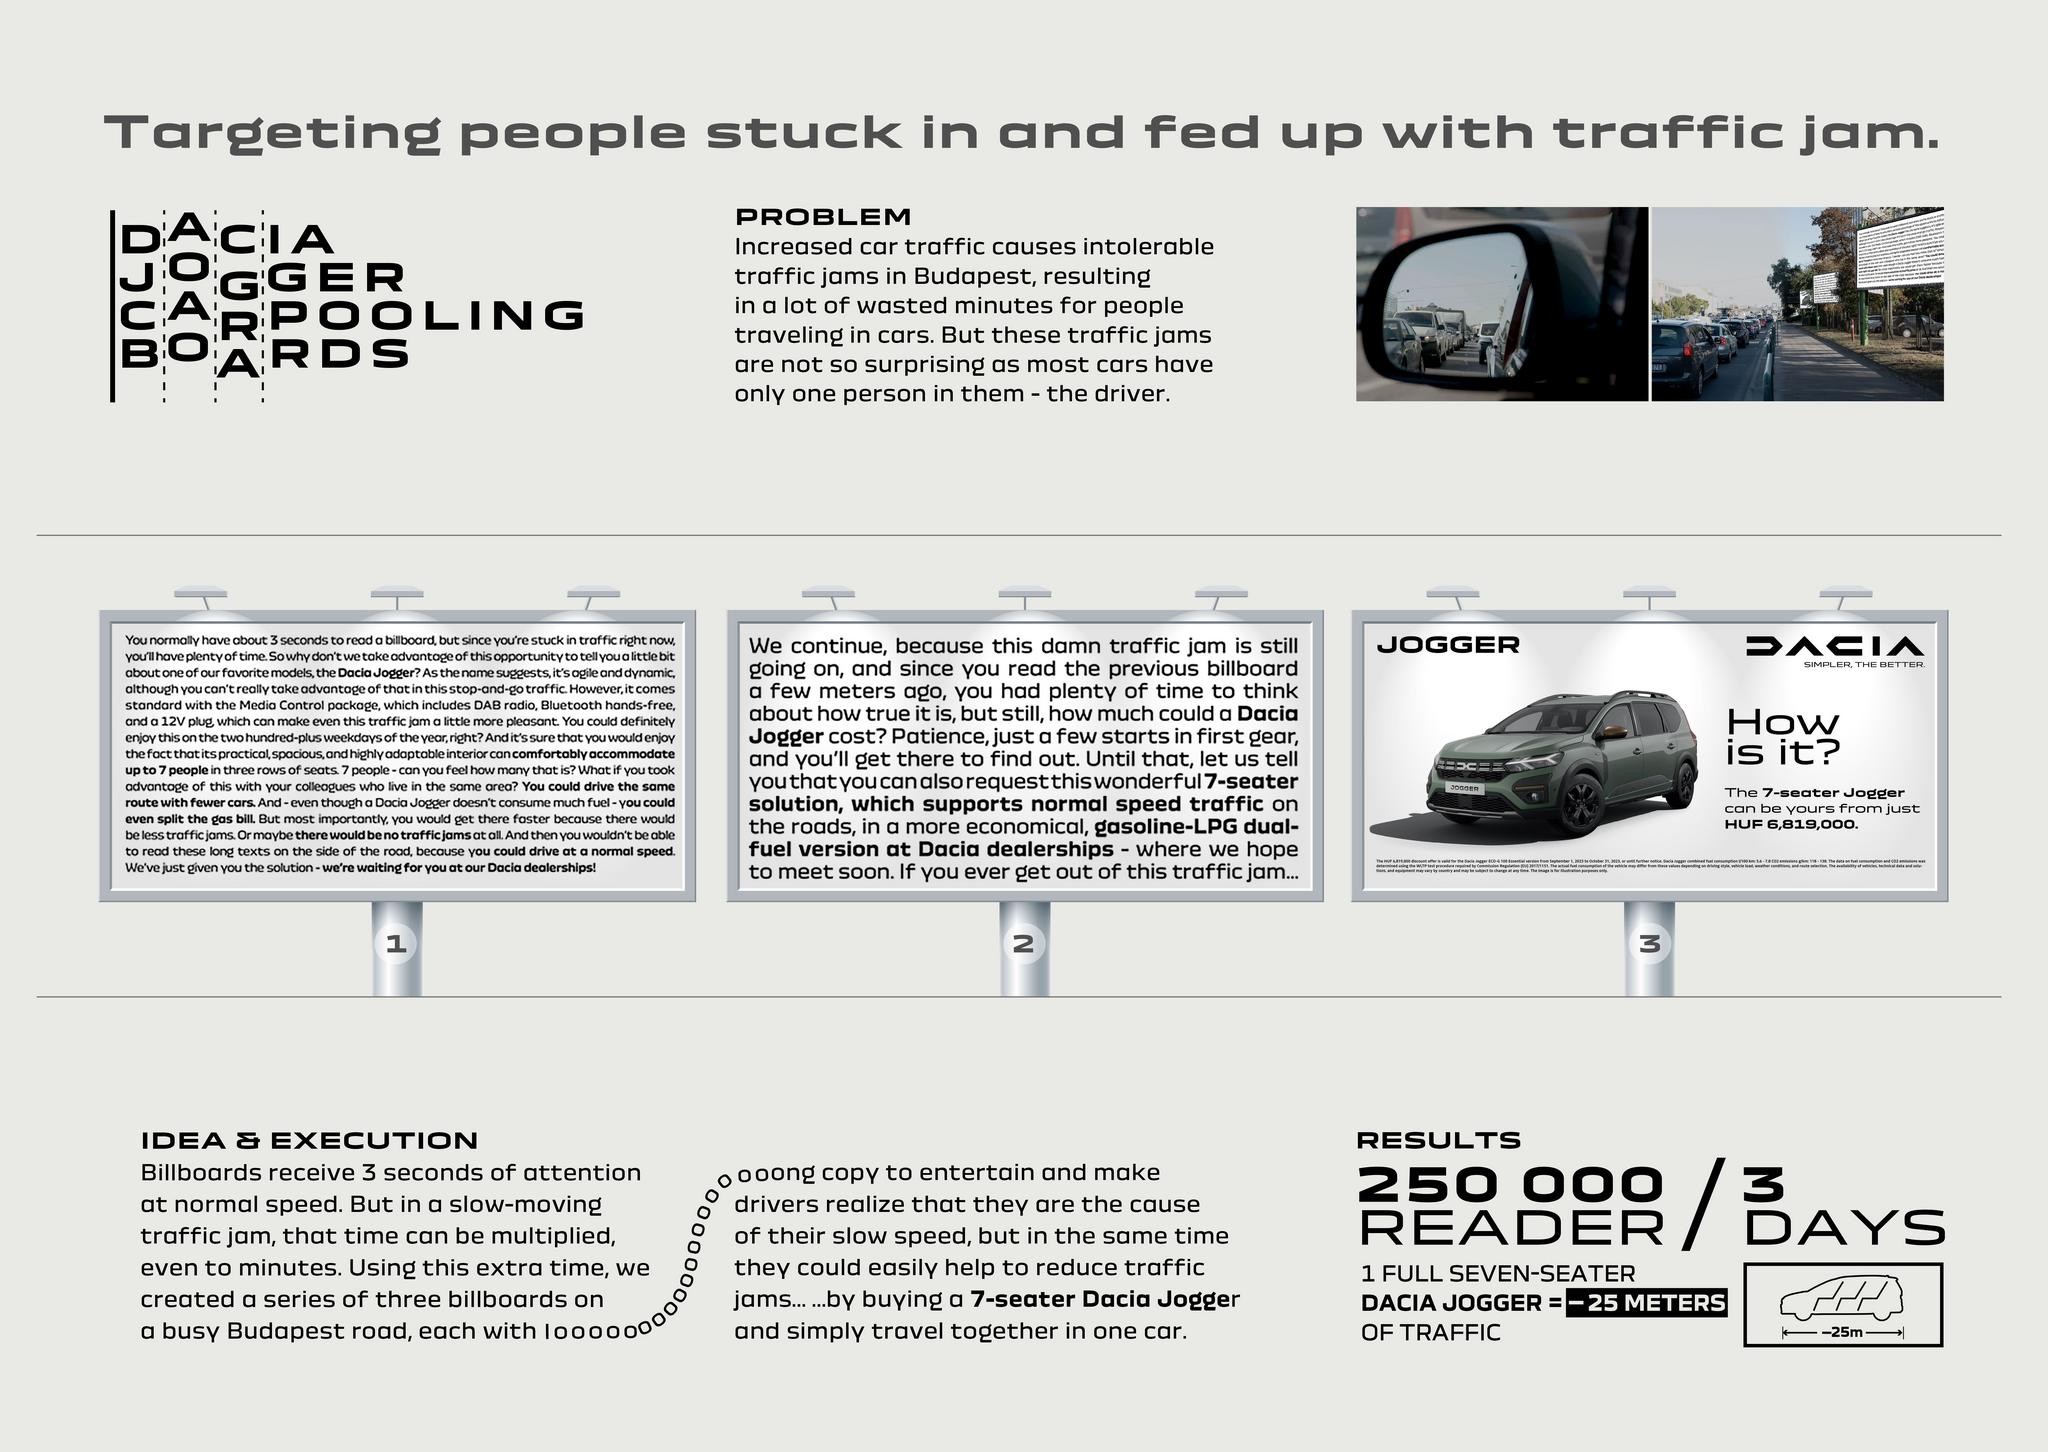 Dacia Jogger Carpooling Boards